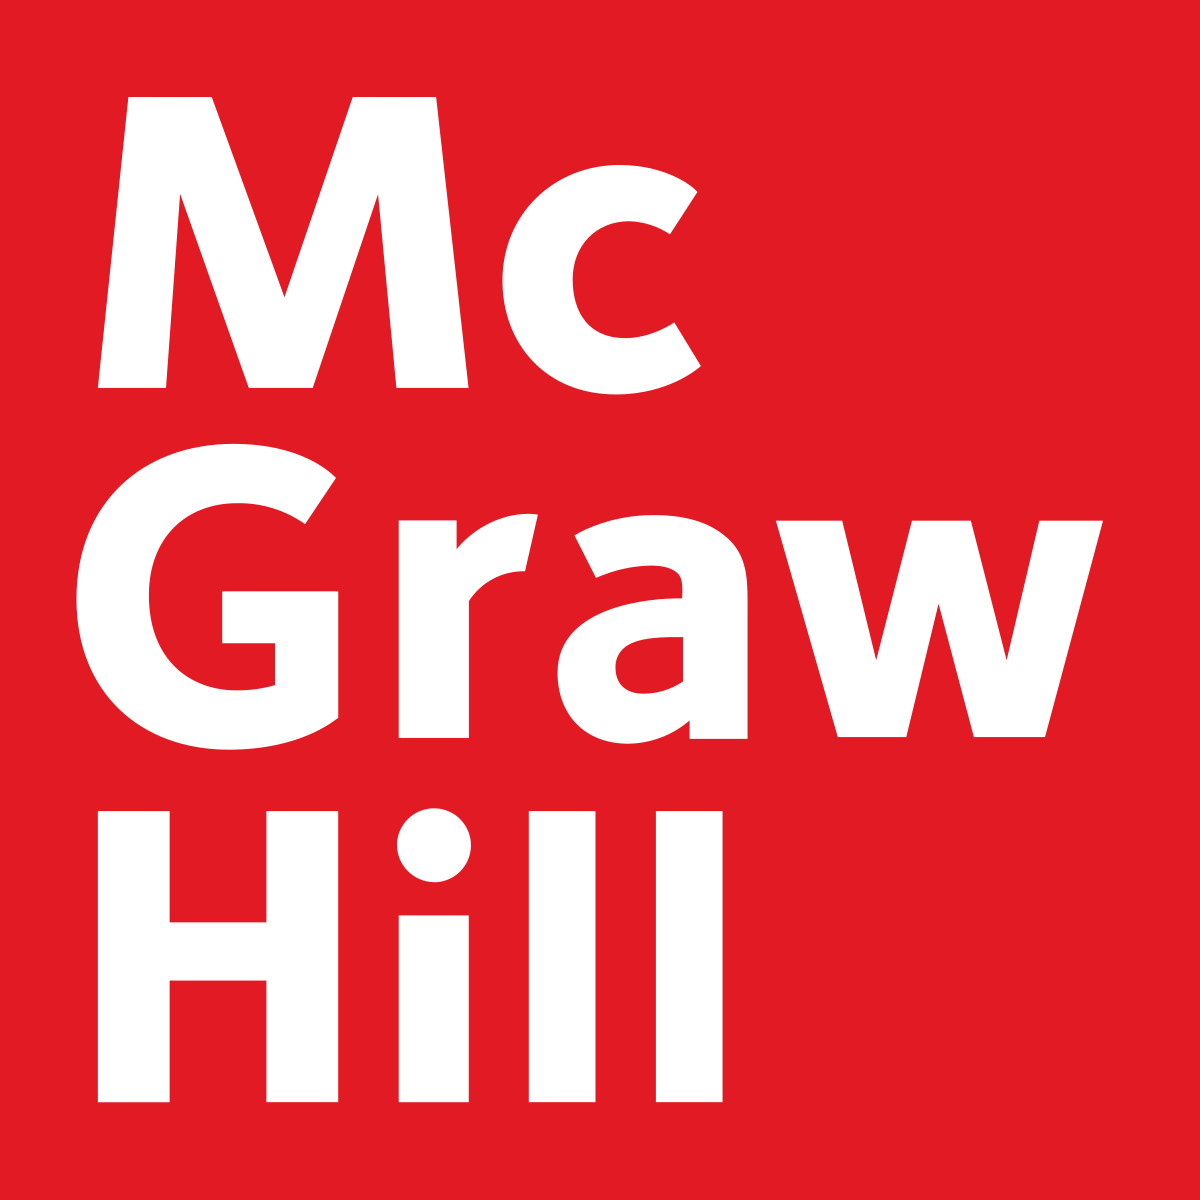 McGraw Hill Education logo